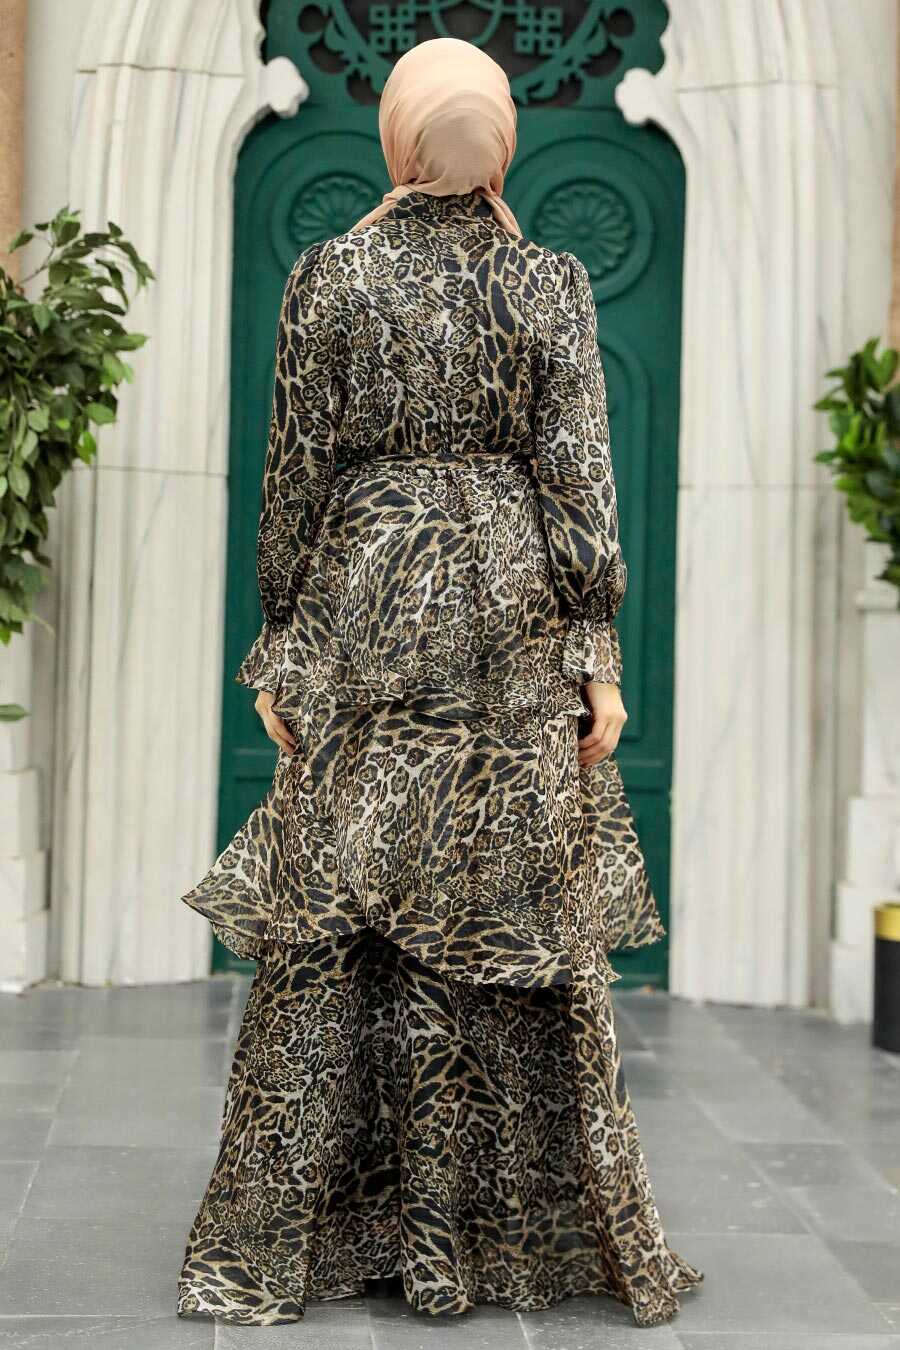 Neva Style - Leopard Hijab For Women Dress 3825LP